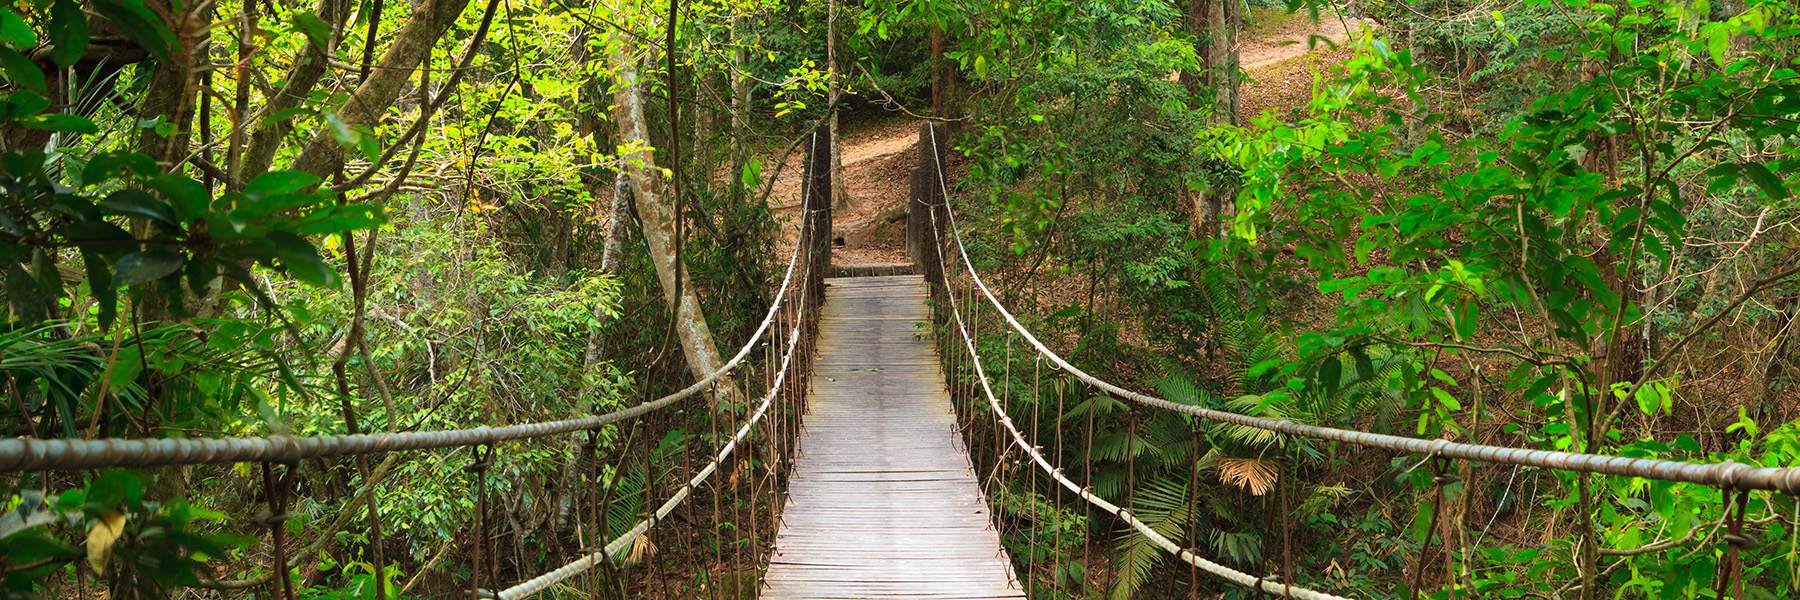 bridge to the jungle in Khao Yai national park, Thailand